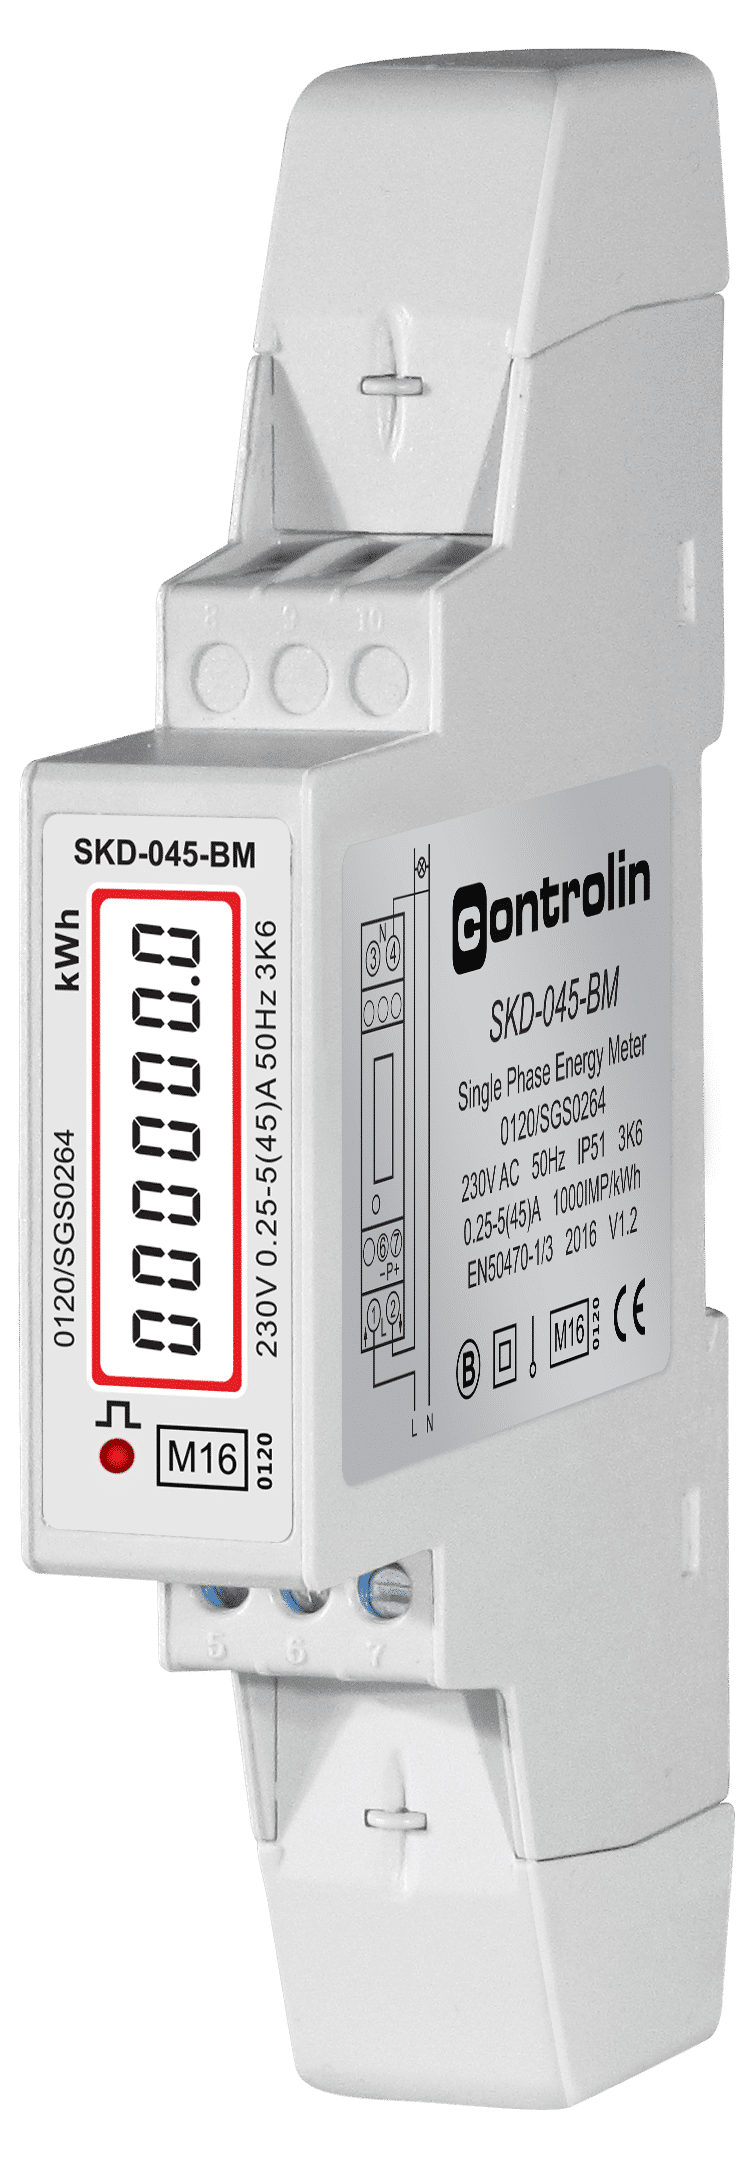 SKD-045-BM - Energiezähler - Controlin [BILD] - 2021